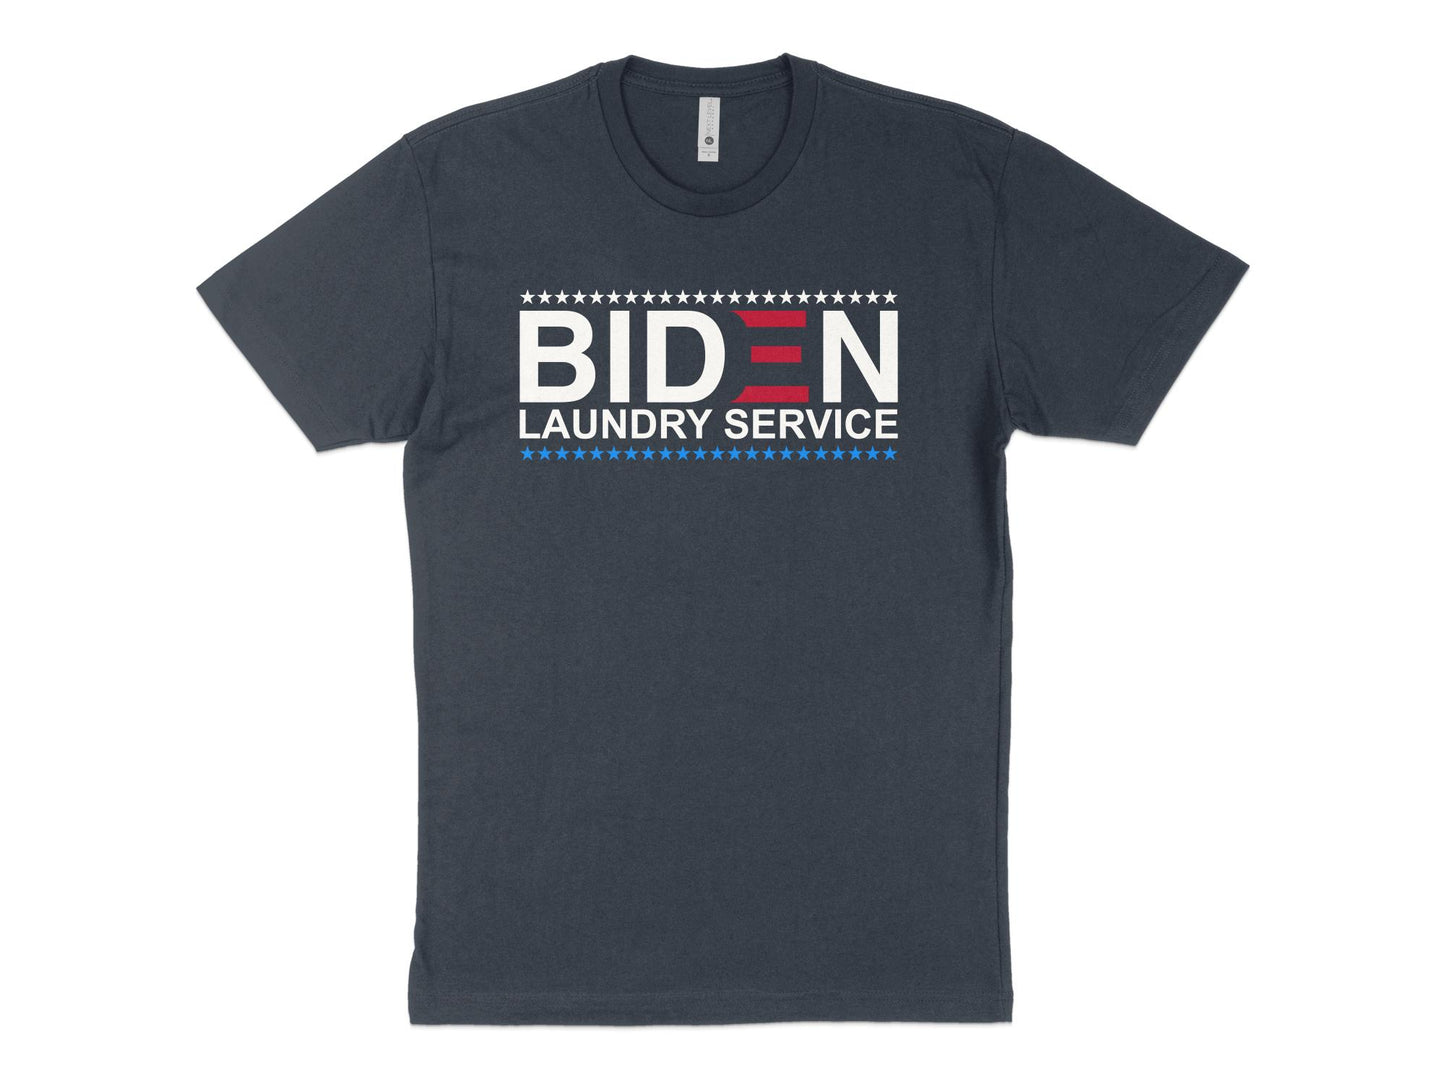 Joe Biden Shirt - Laundry Service, blue